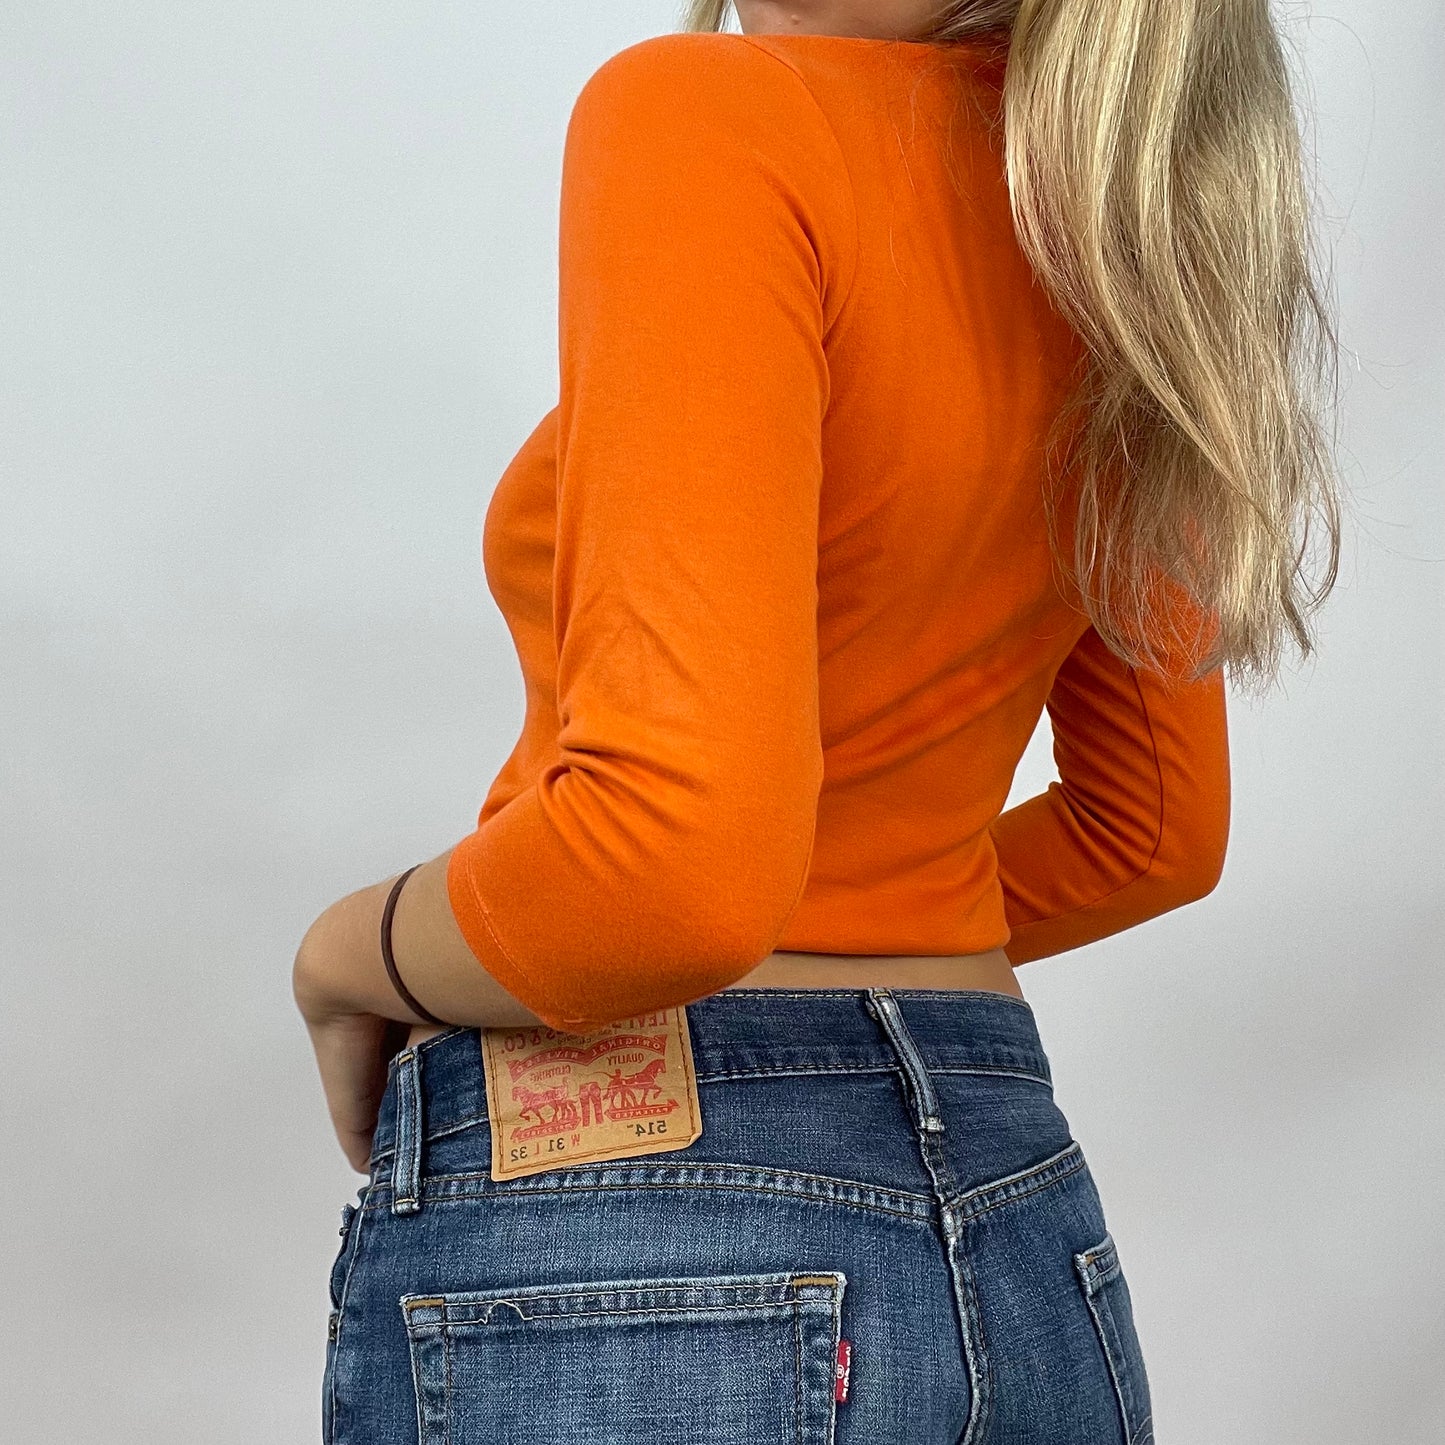 POSH AND BECKS DROP | XS orange graphic “off track” long sleeve top